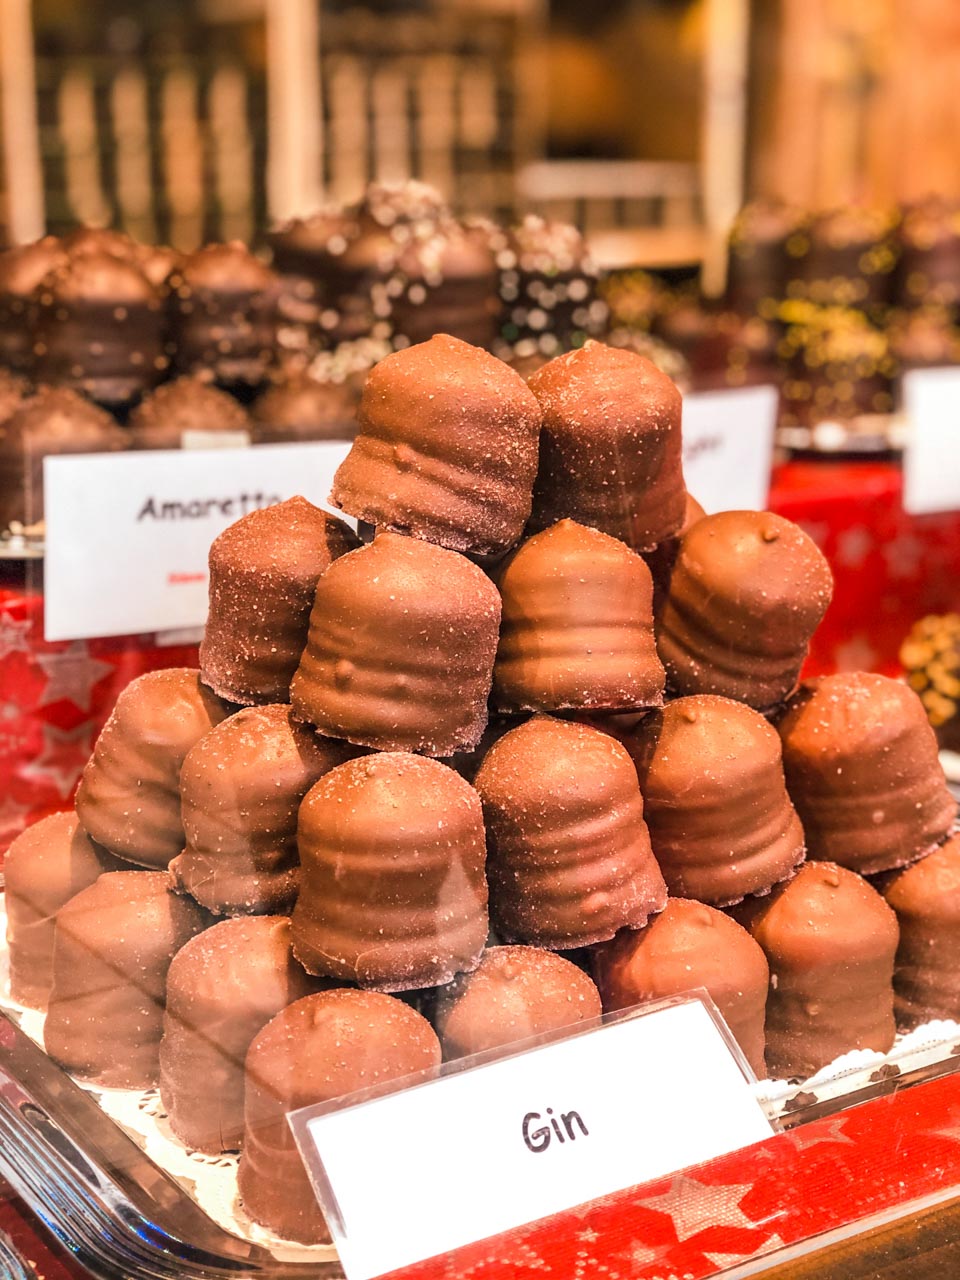 Chocolate-coated marshmallow treats at a Christmas market in Hamburg